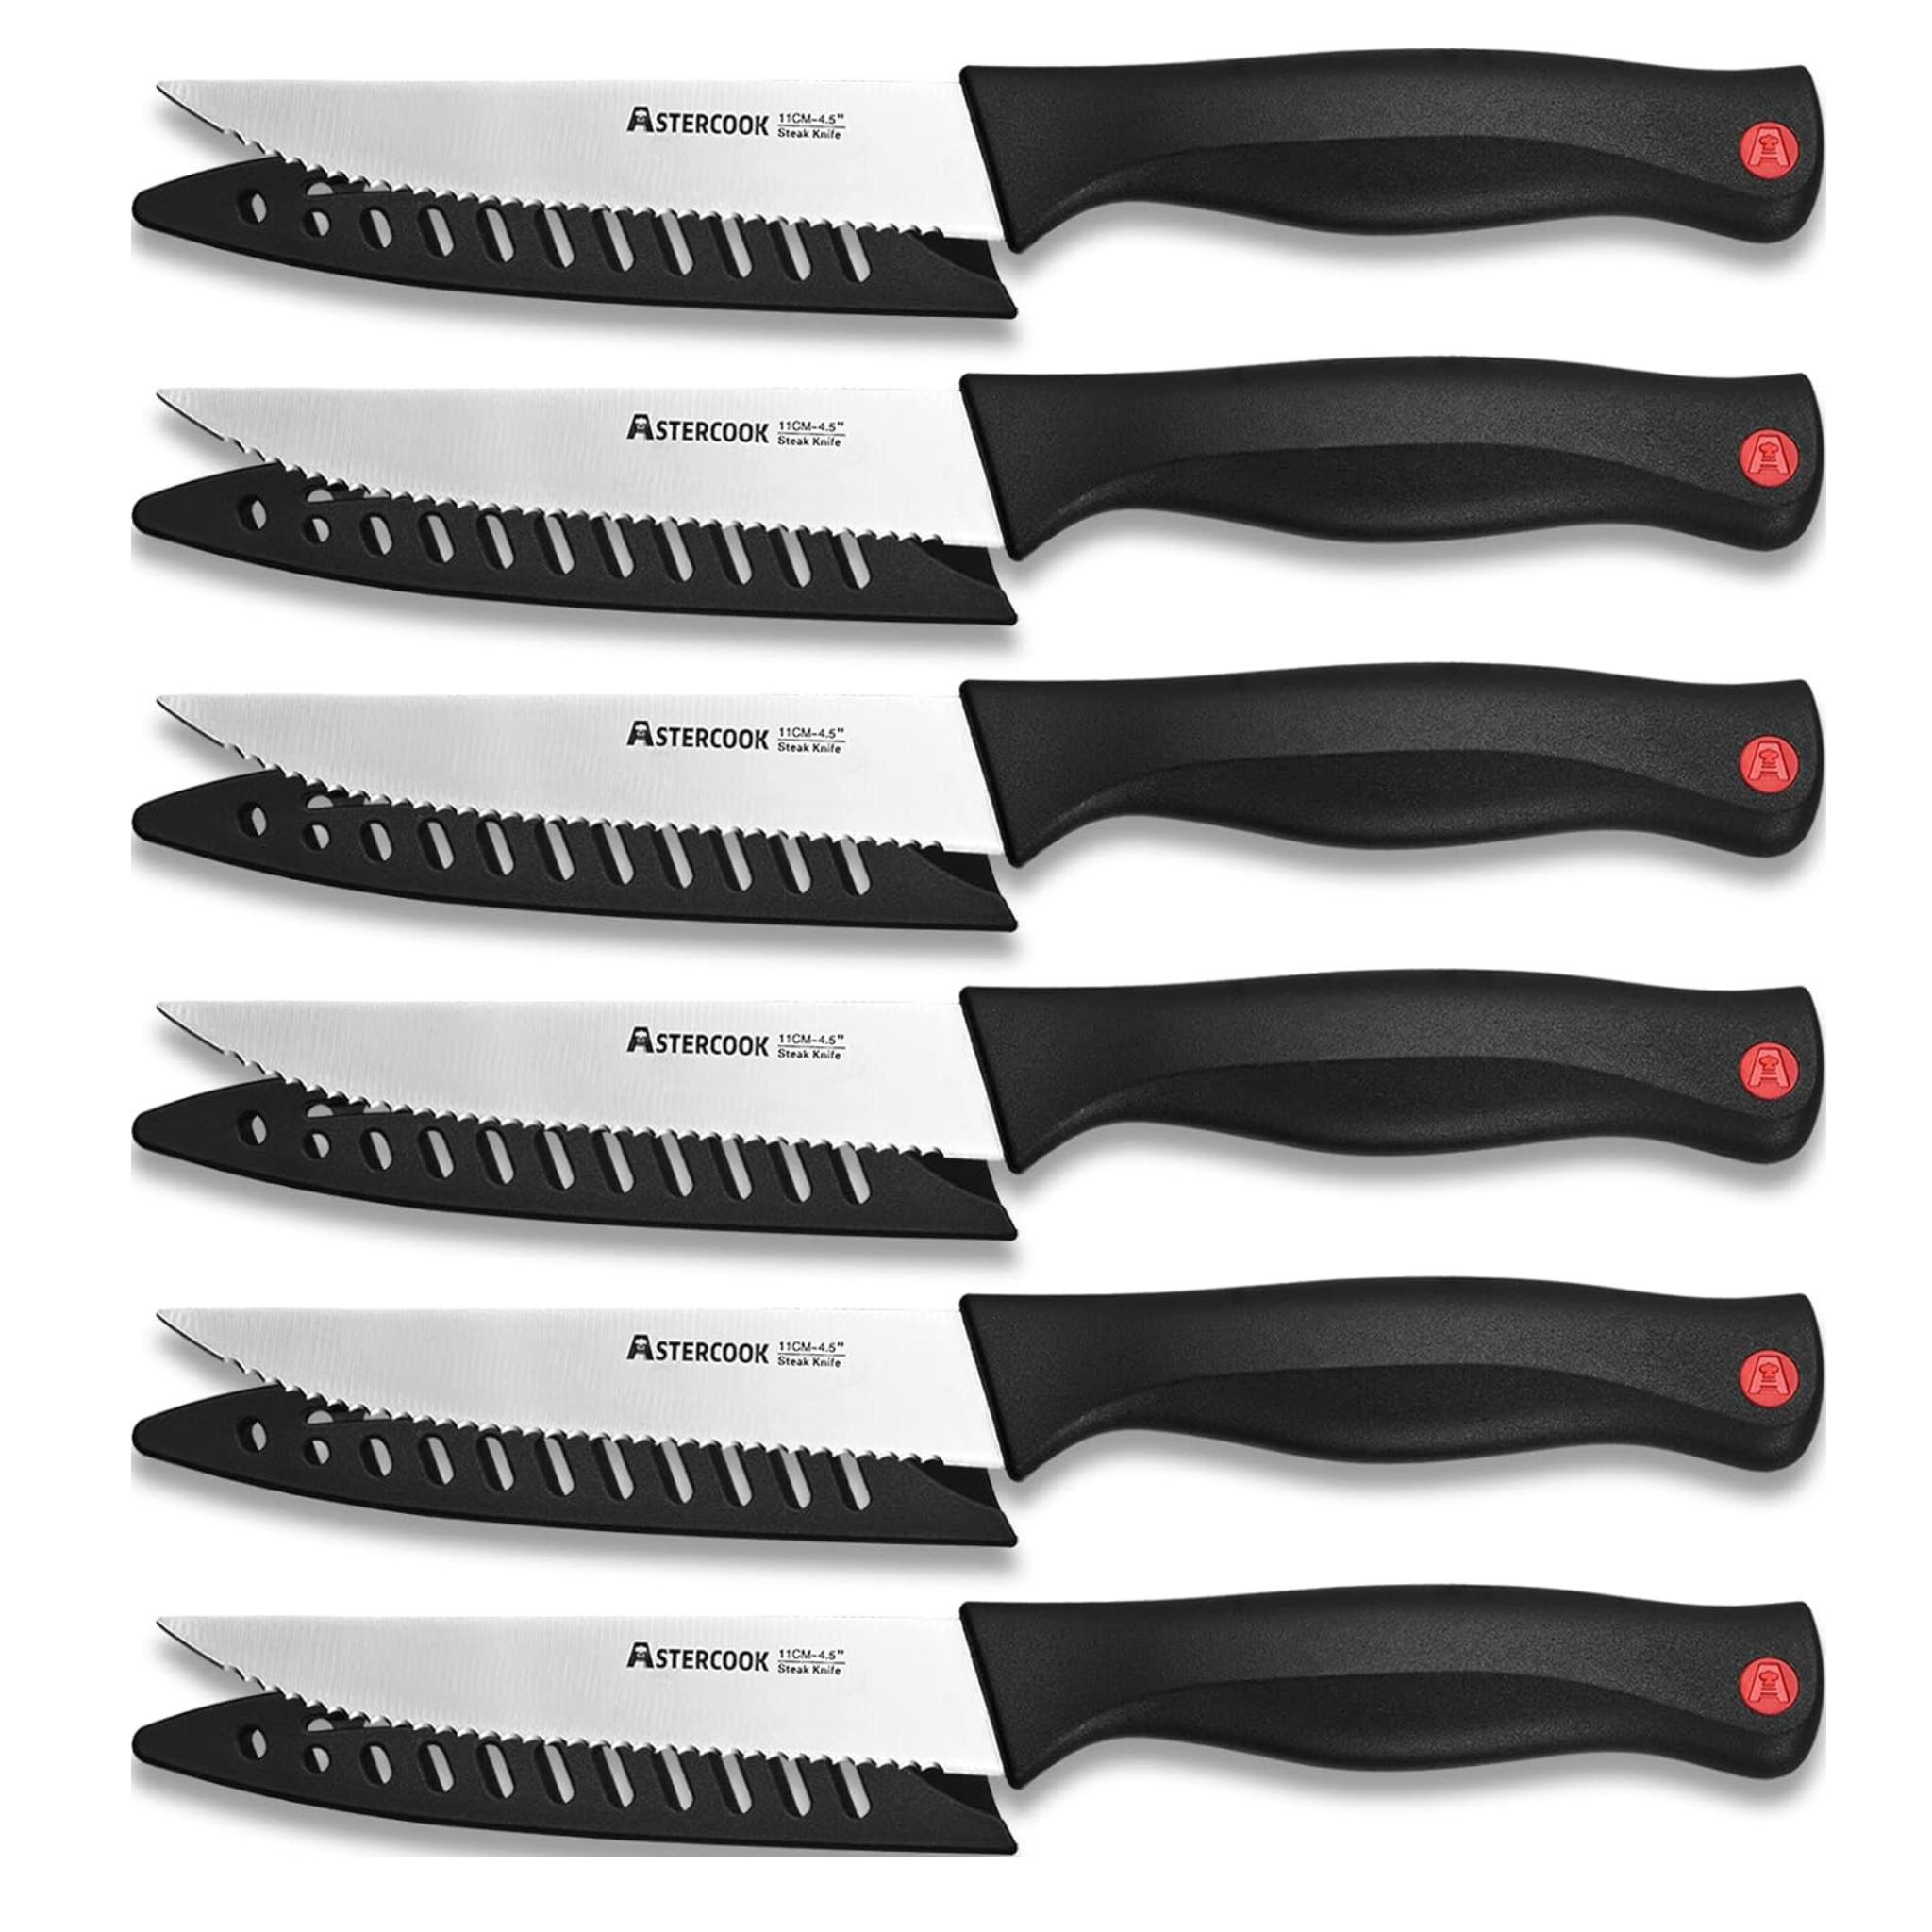 6-Piece Astercook Stainless Steel Ultra Sharp Kitchen Knife Set